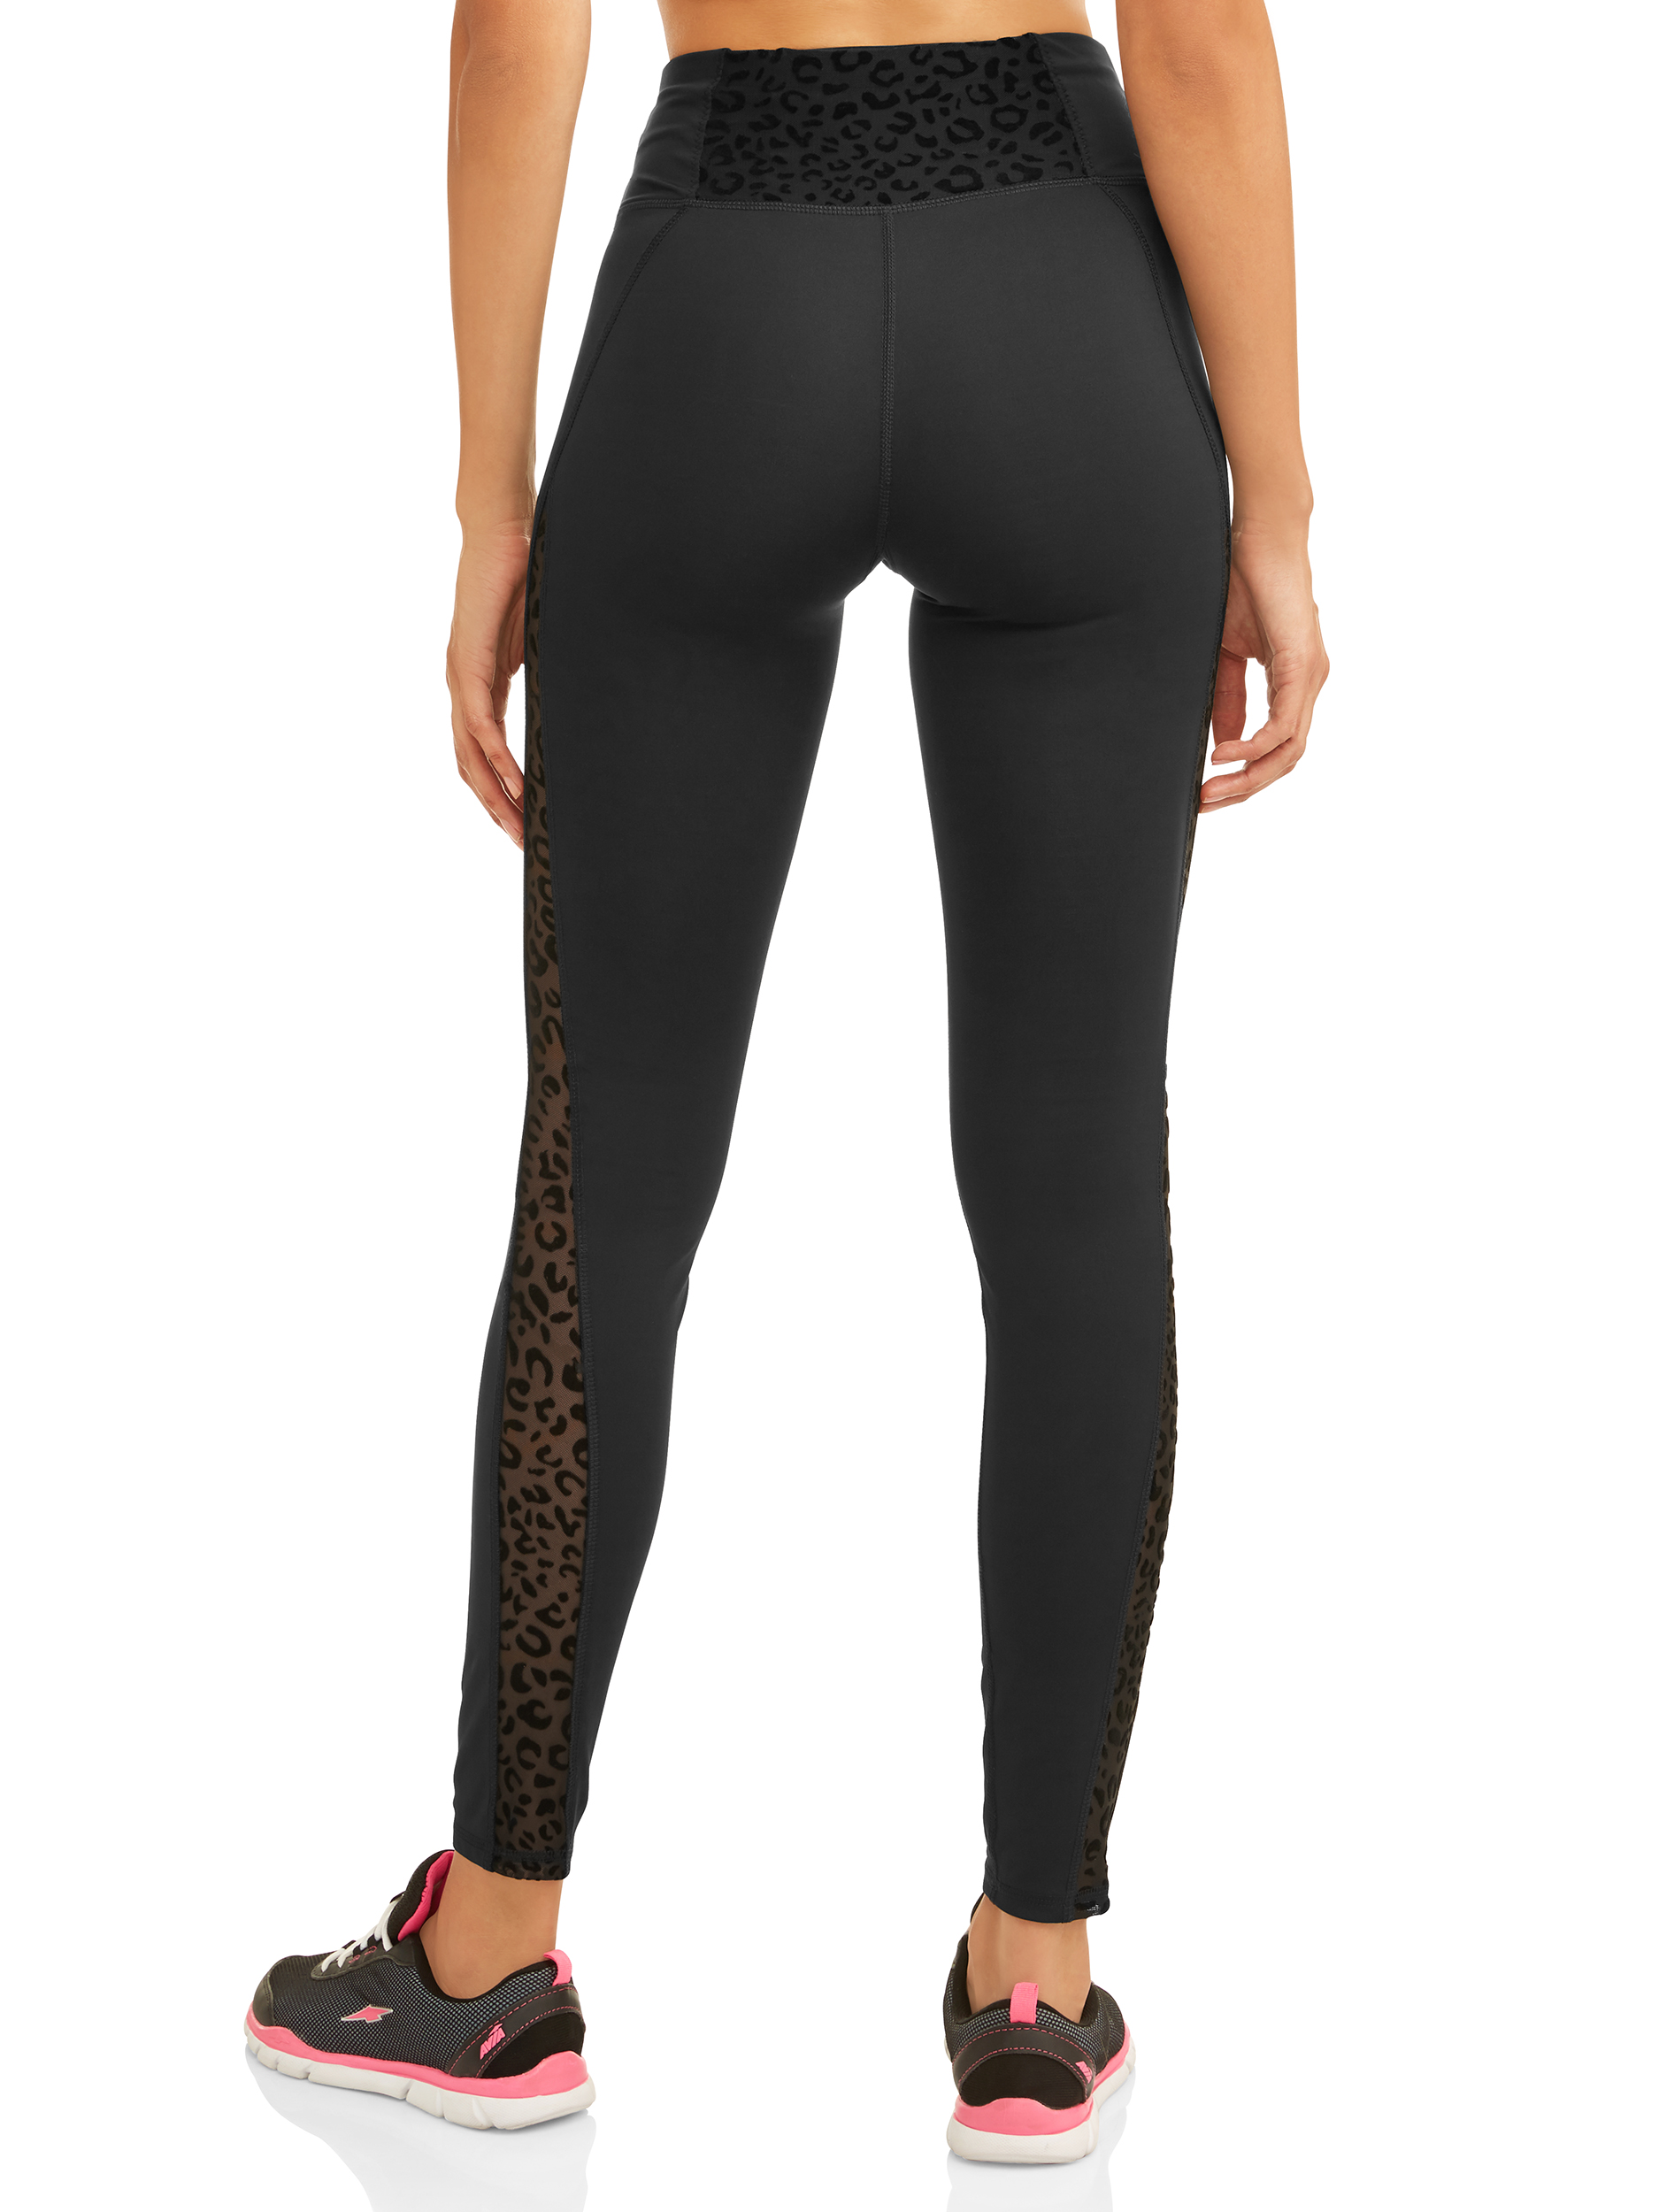 Women's Activewear Mesh Leopard Print Side Stripe Legging - image 2 of 3